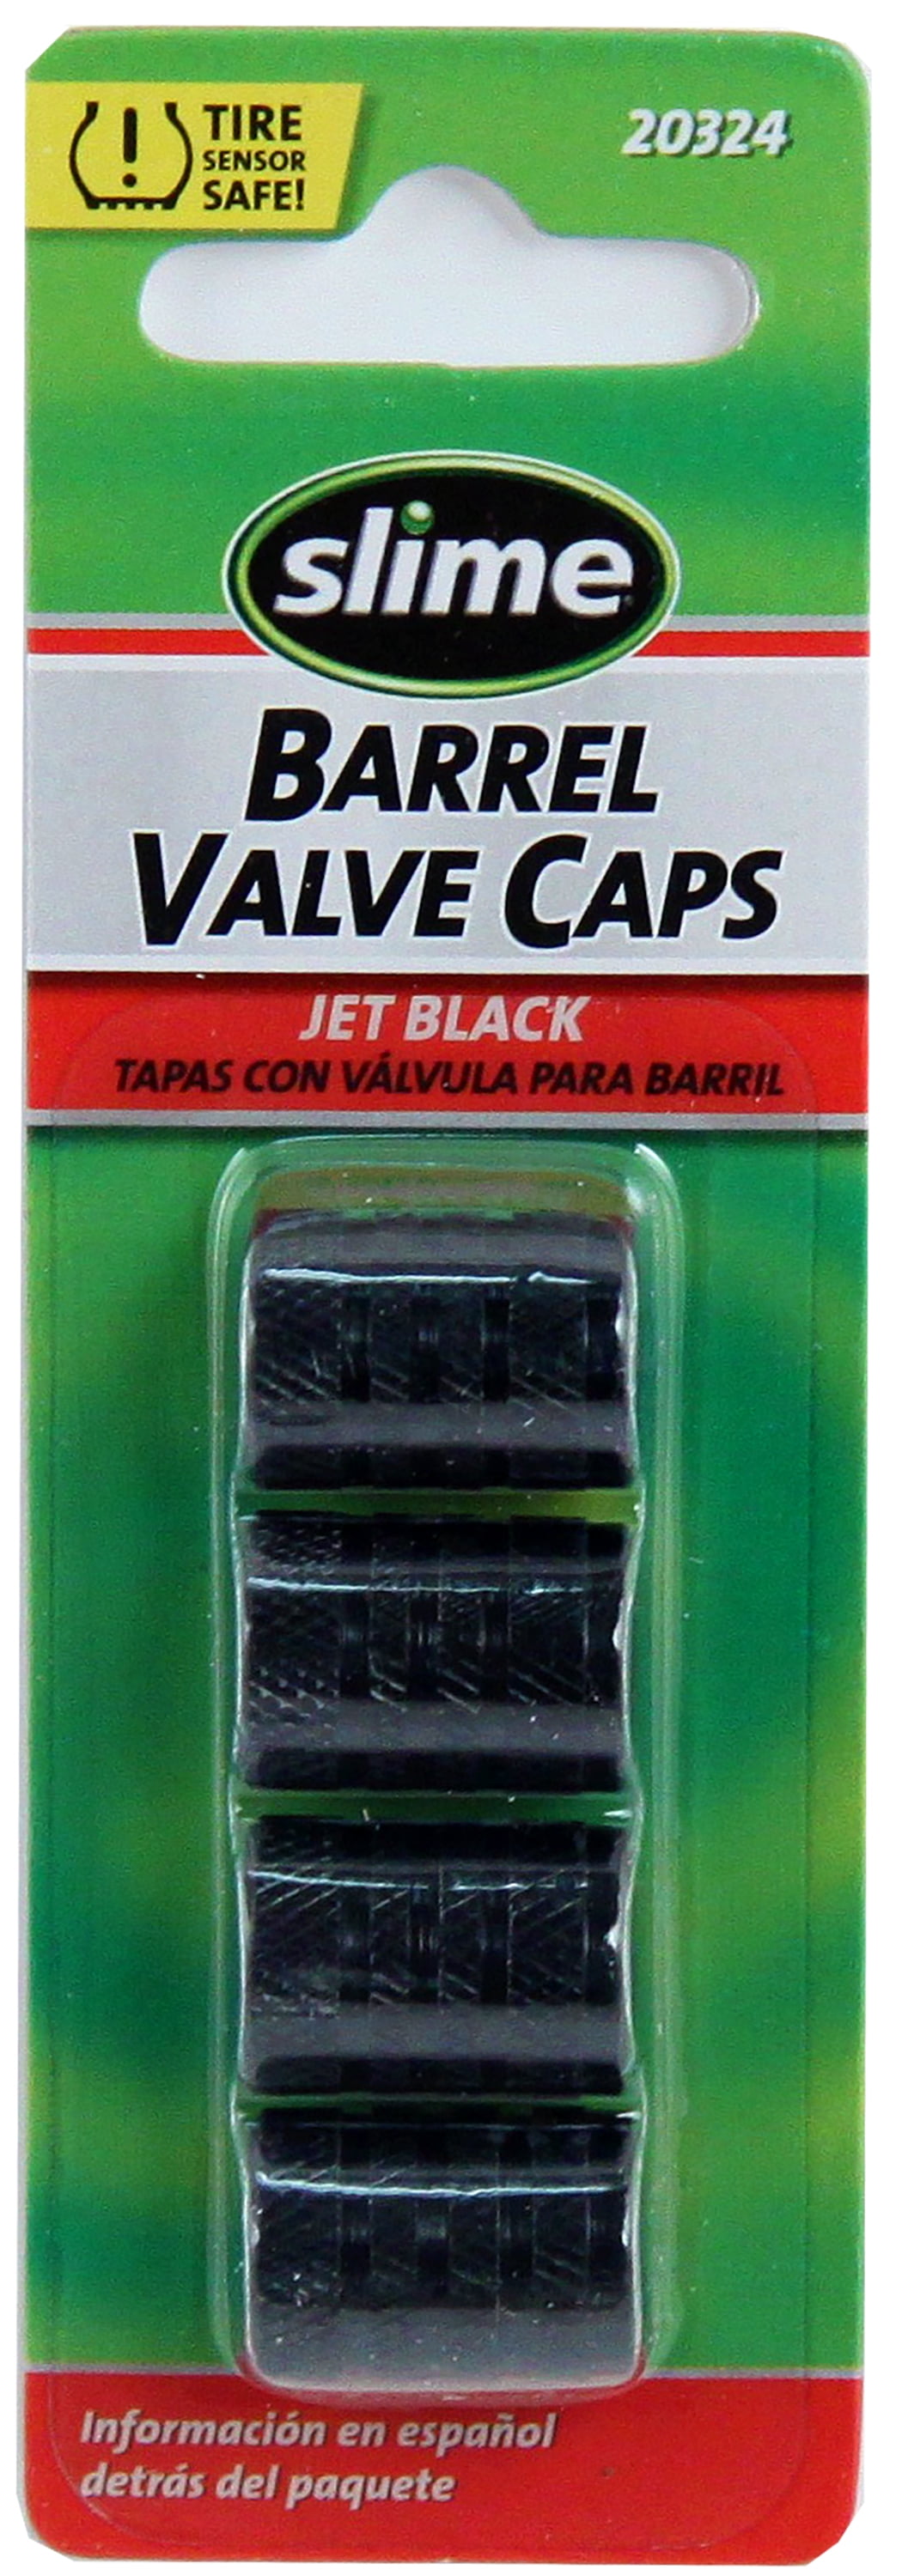 Slime Barrel Valve Stem Cap Metal Replacements, Black - 20324